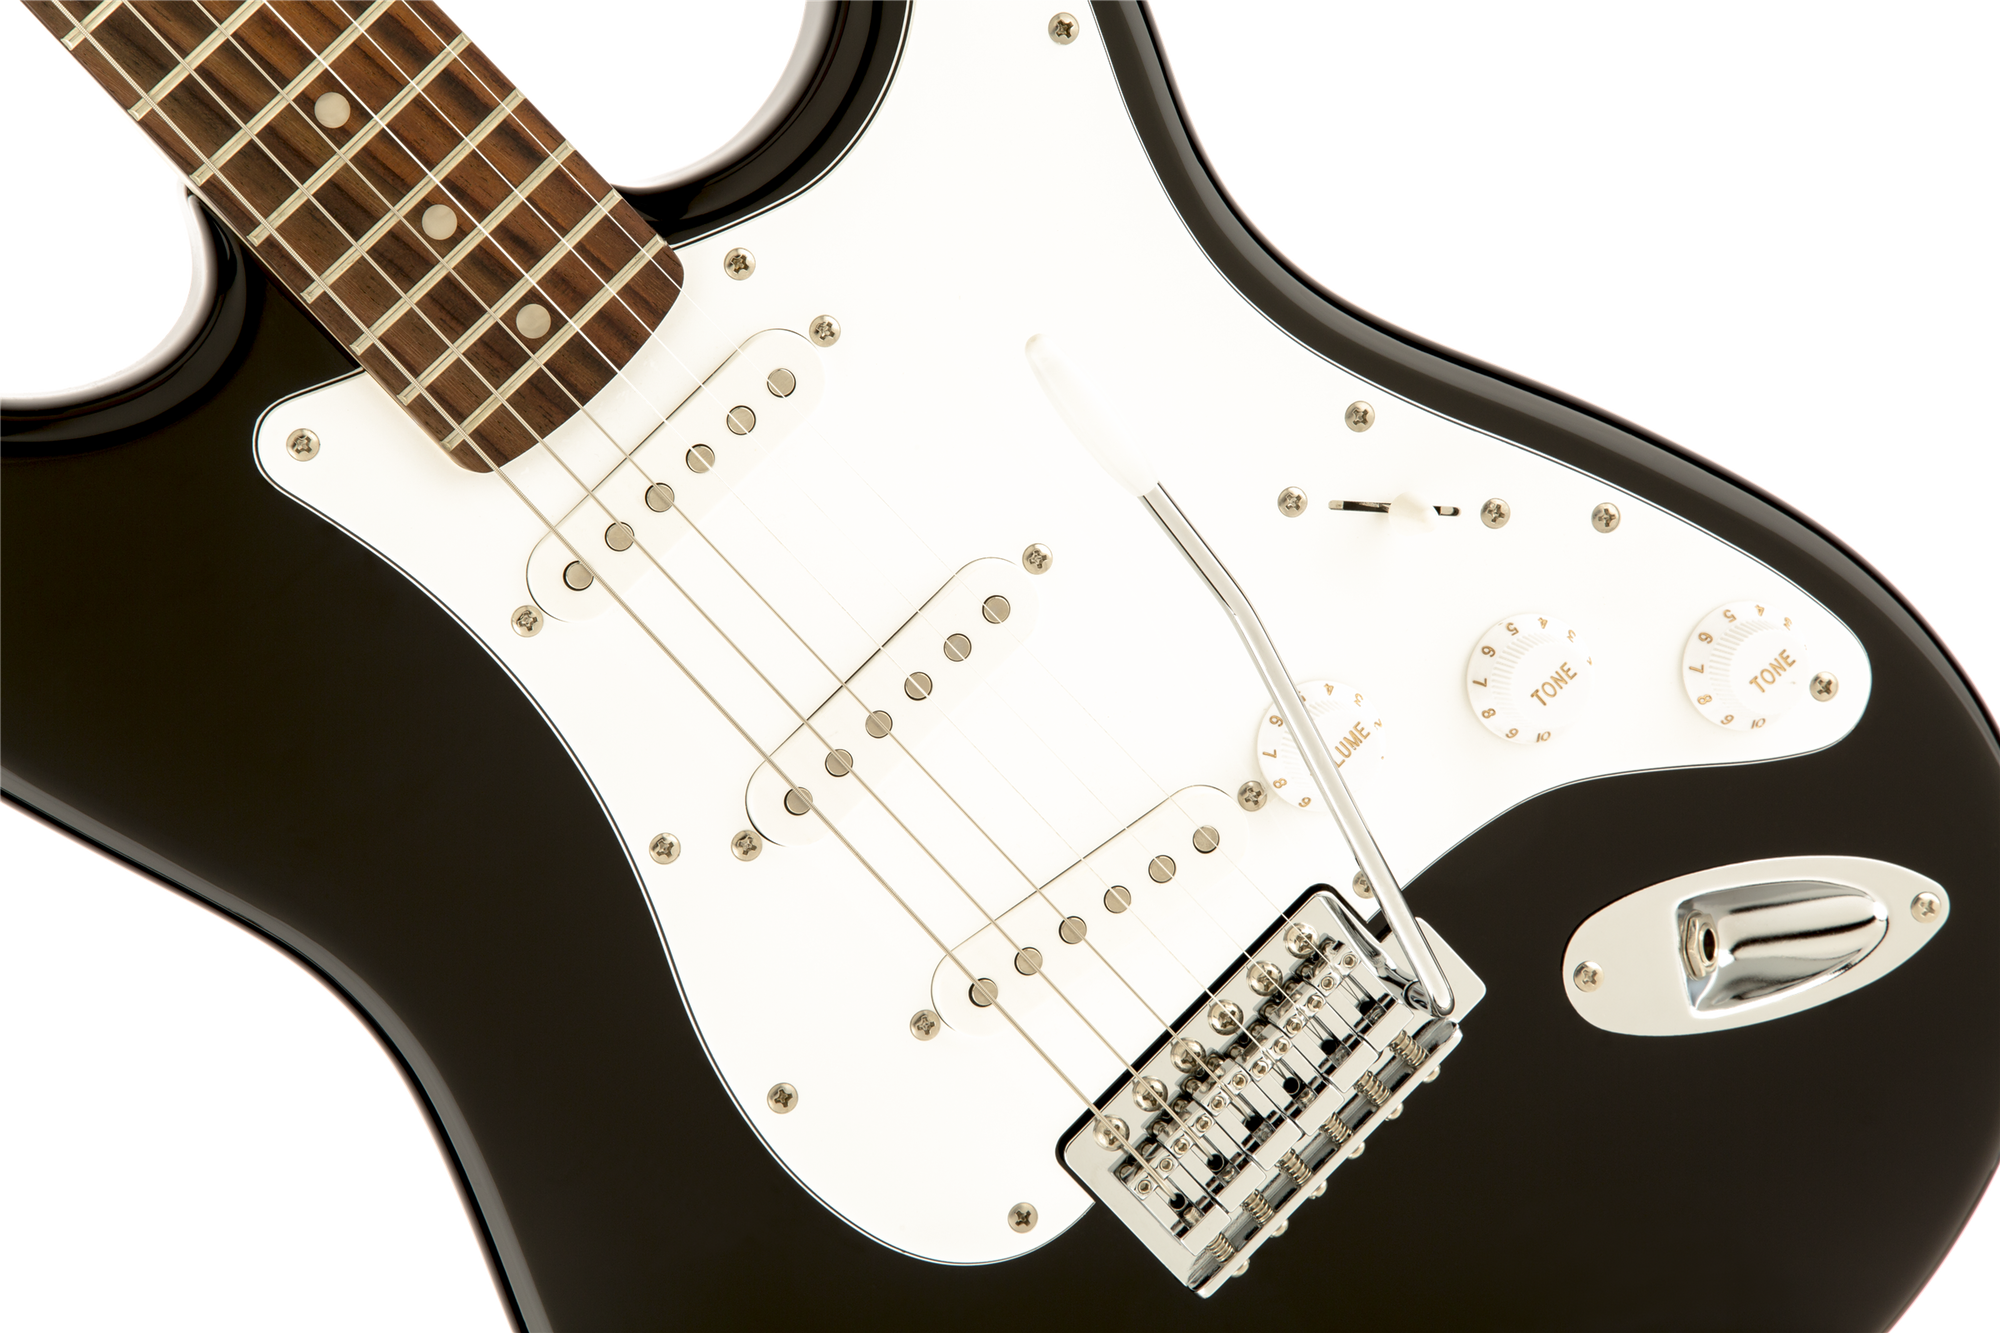 Affinity Stratocaster - Black